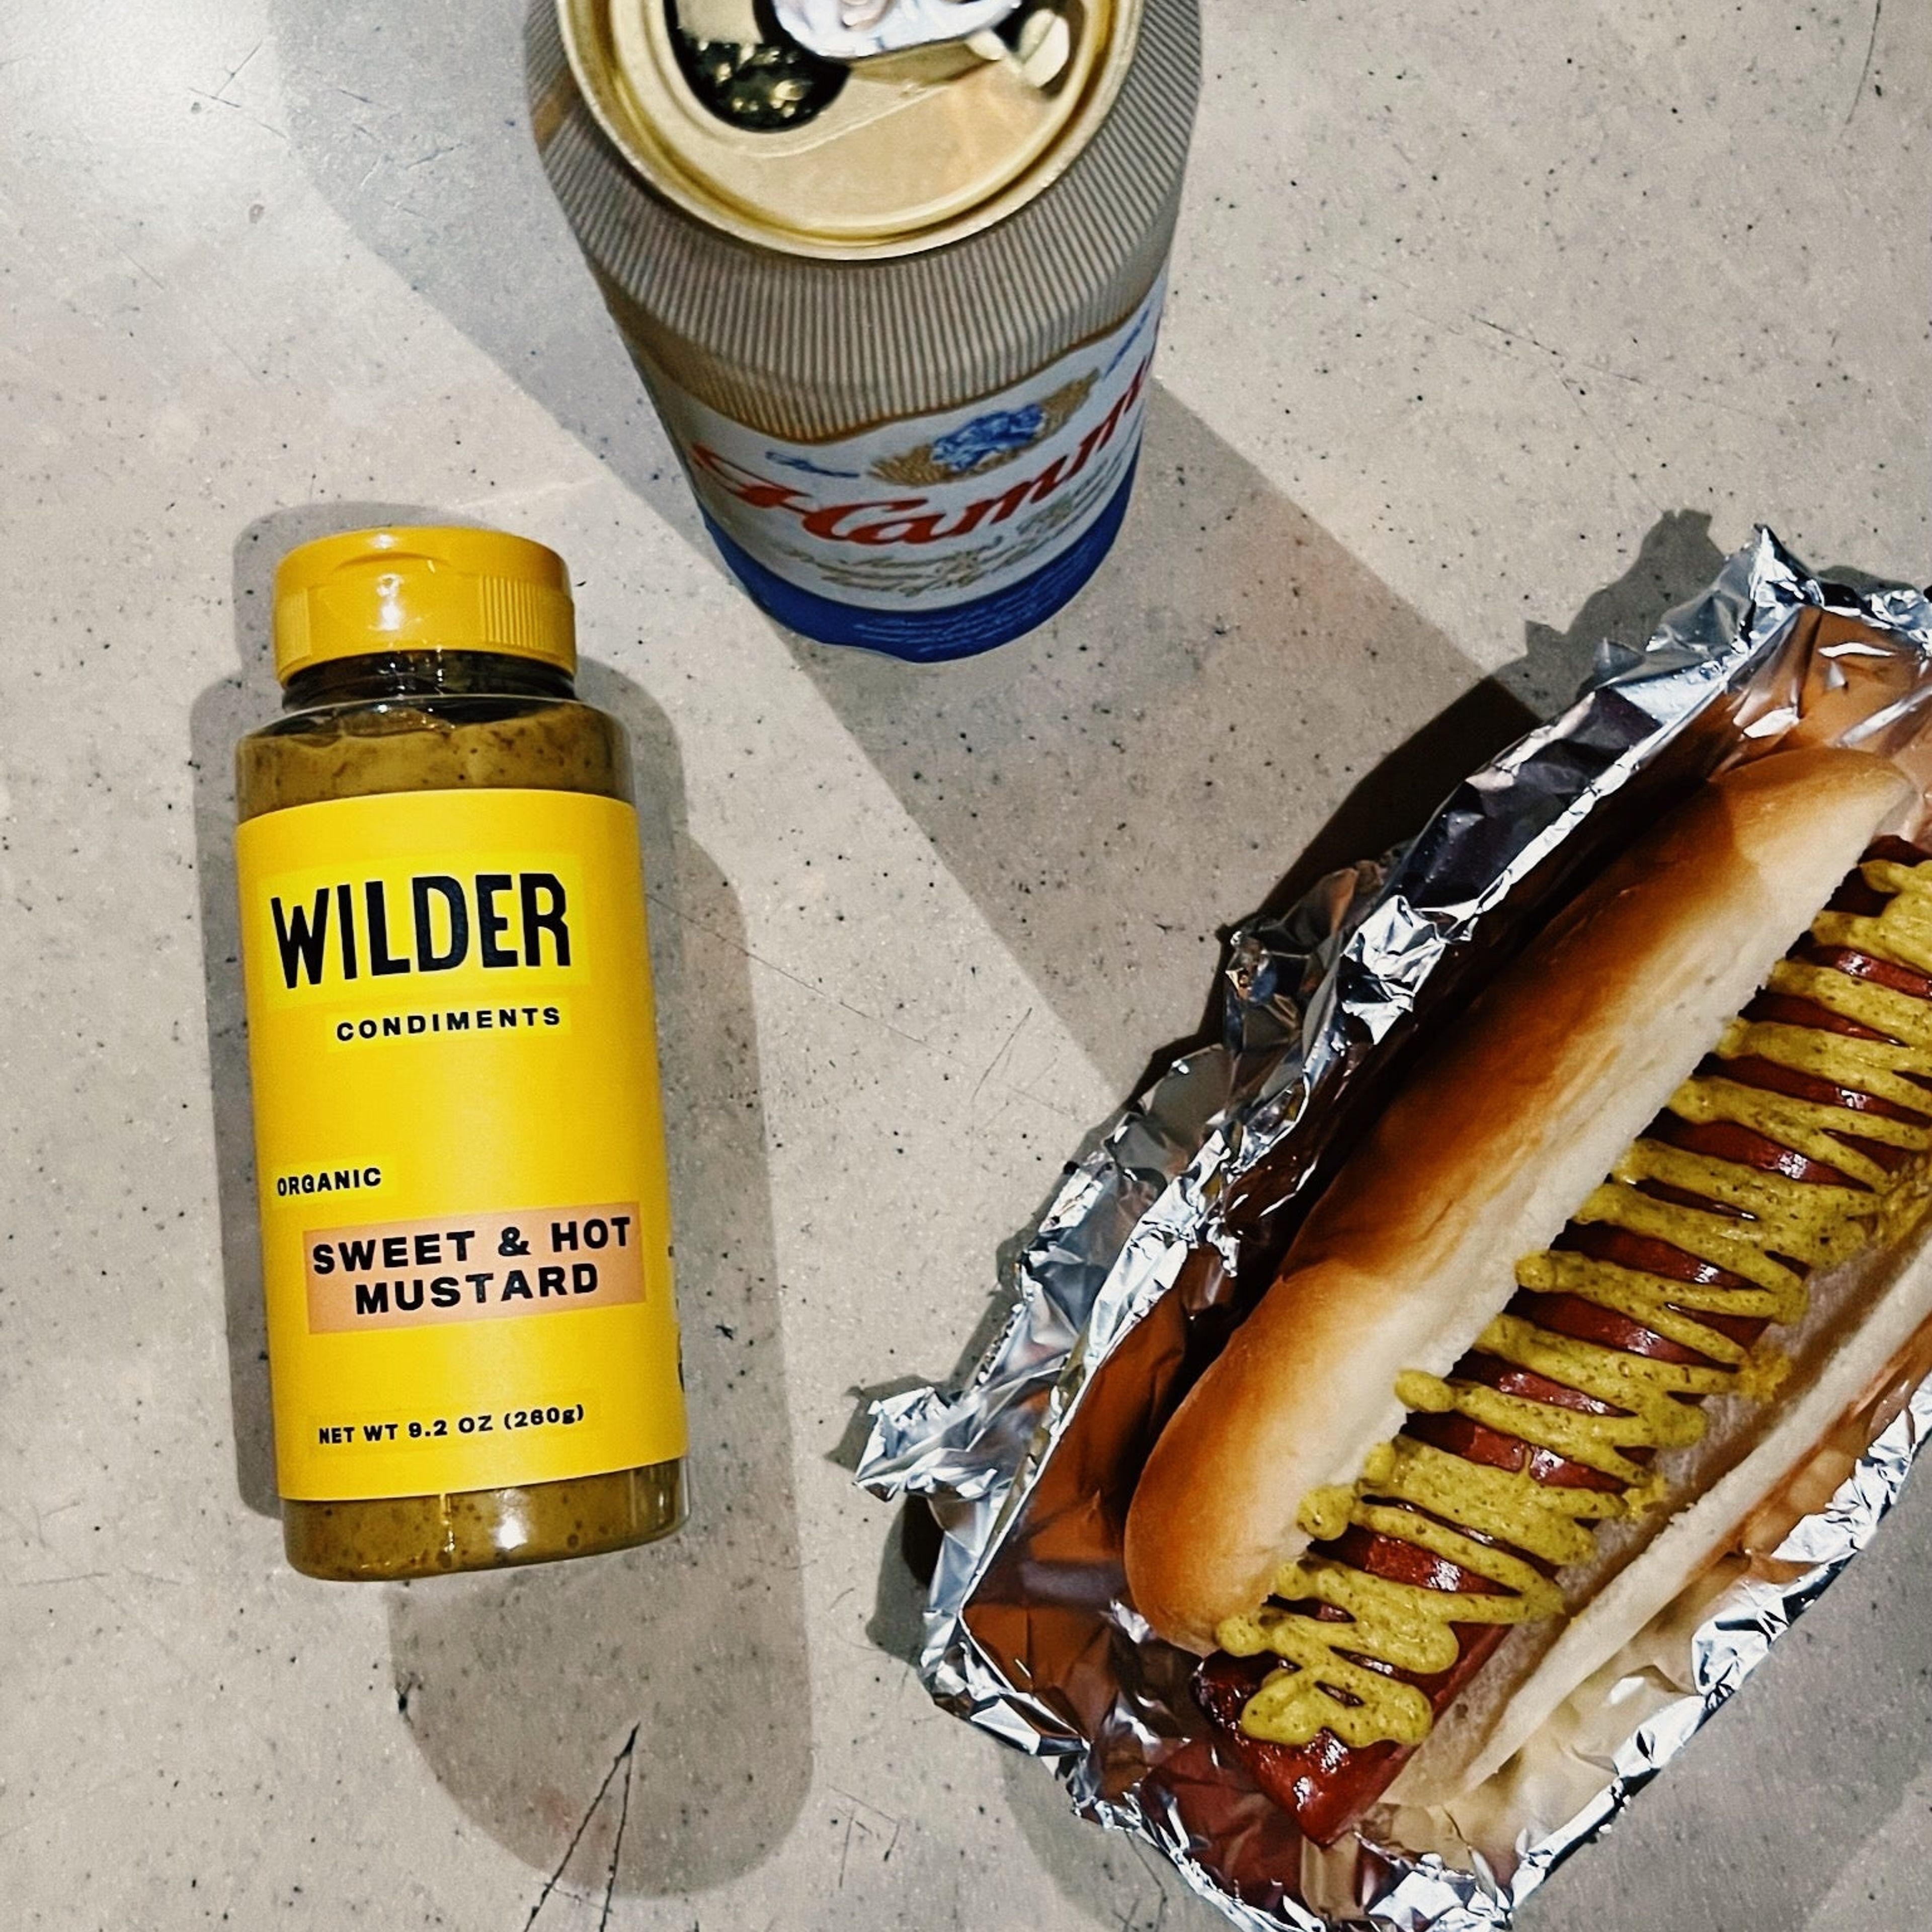 Sweet & Hot Mustard